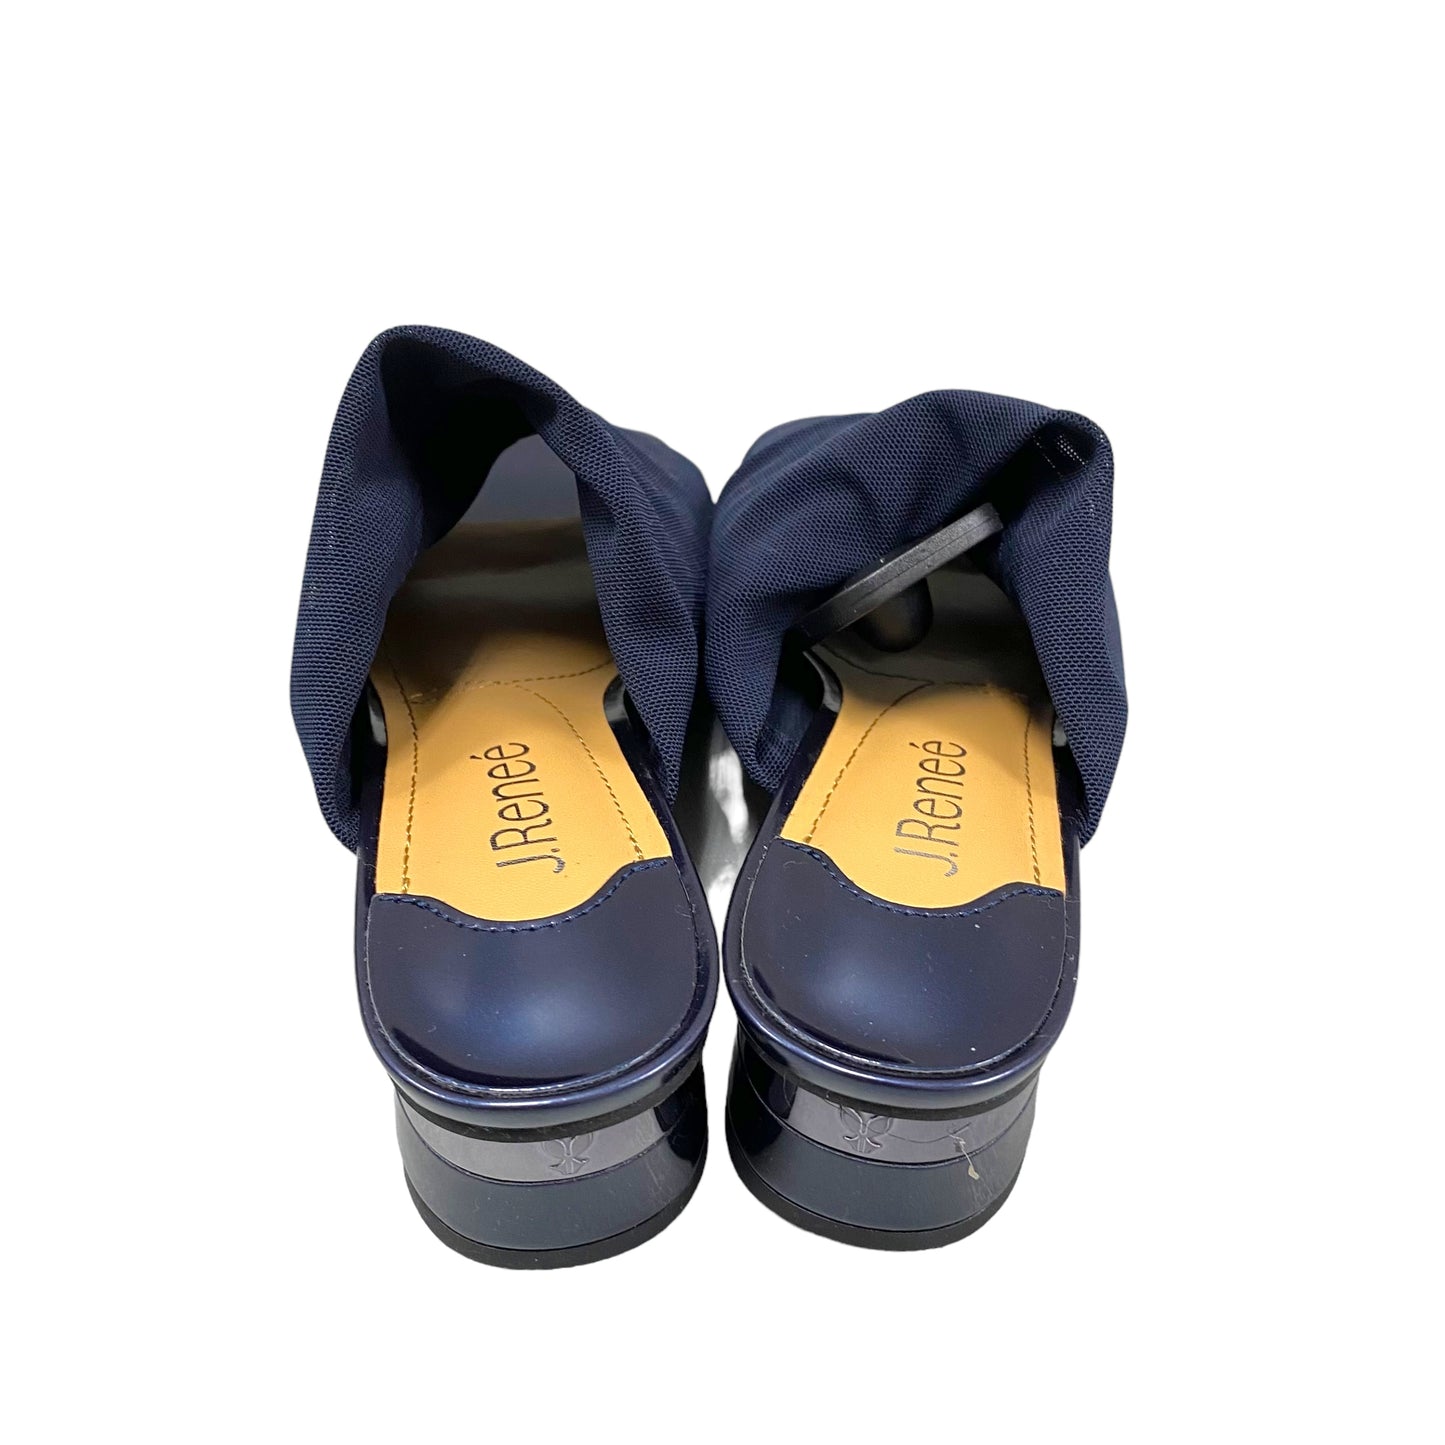 Sandals Heels Block By J Renee  Size: 7.5